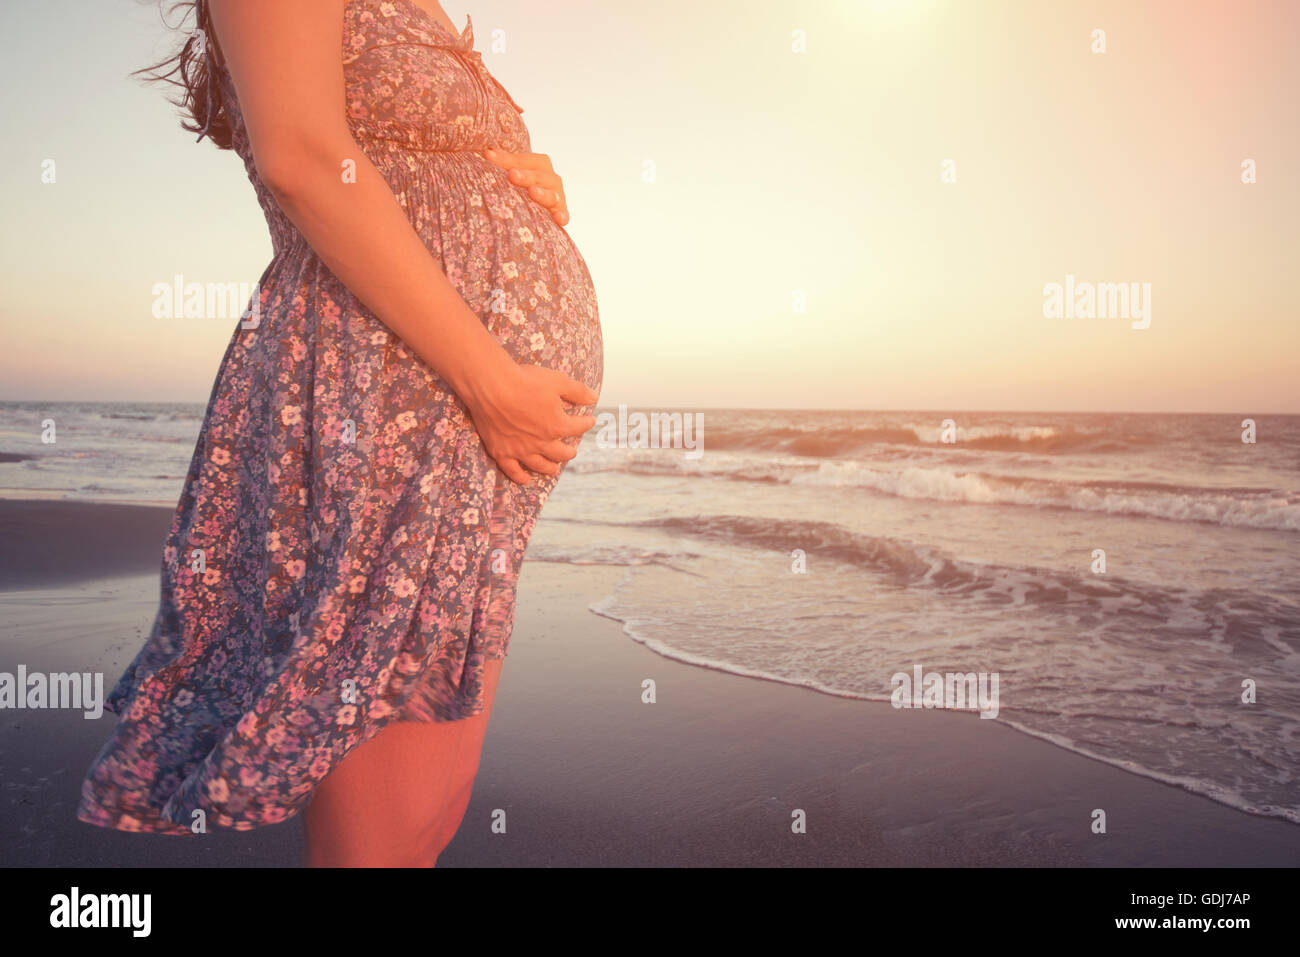 Pregnant woman holding her belly sur la plage with copy space Banque D'Images